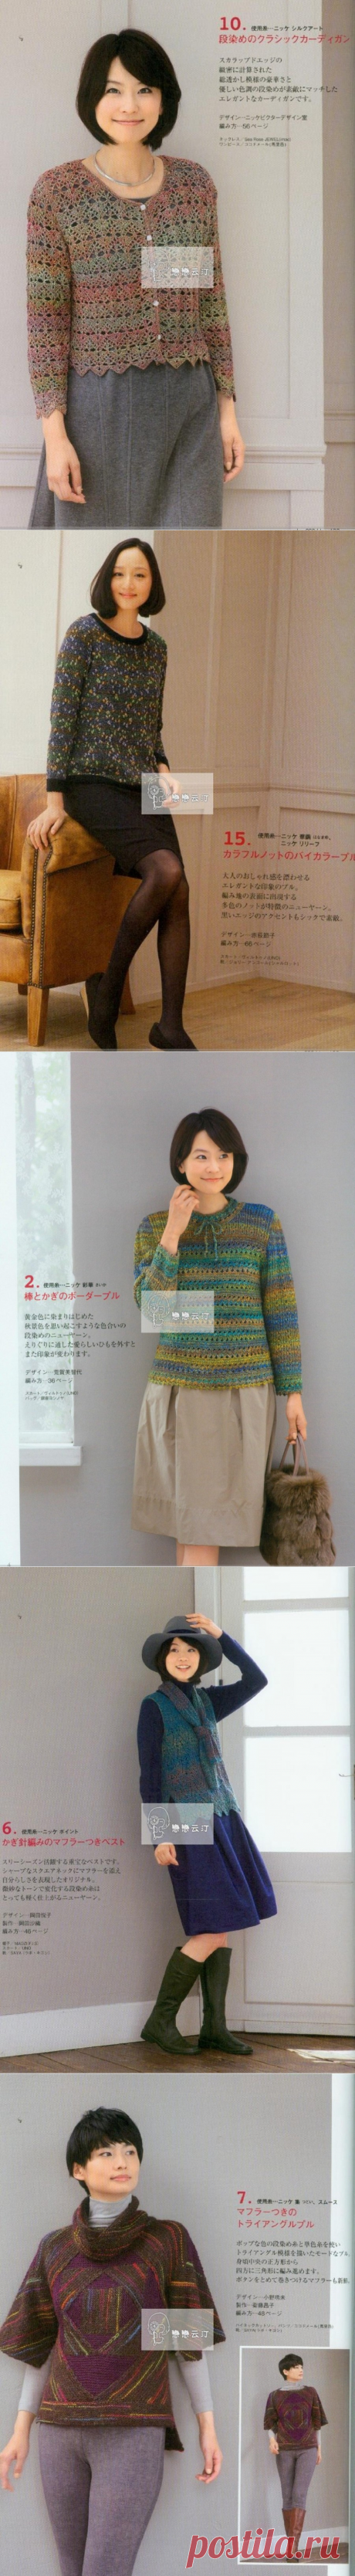 Журнал "Wonderful knit" - 2016г